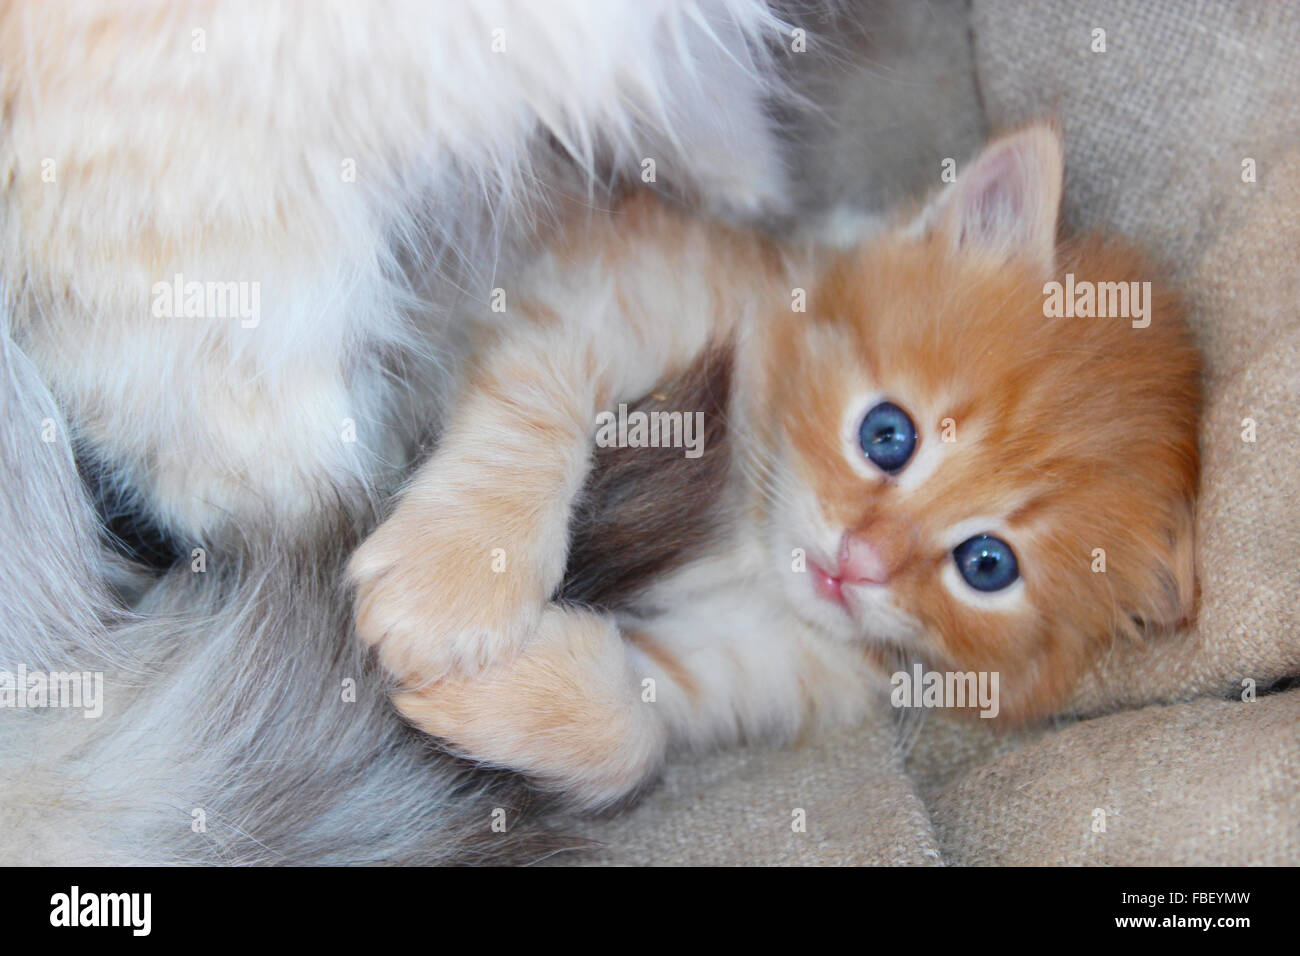 Divertido pequeño gatito con ojos azul claro Foto de stock